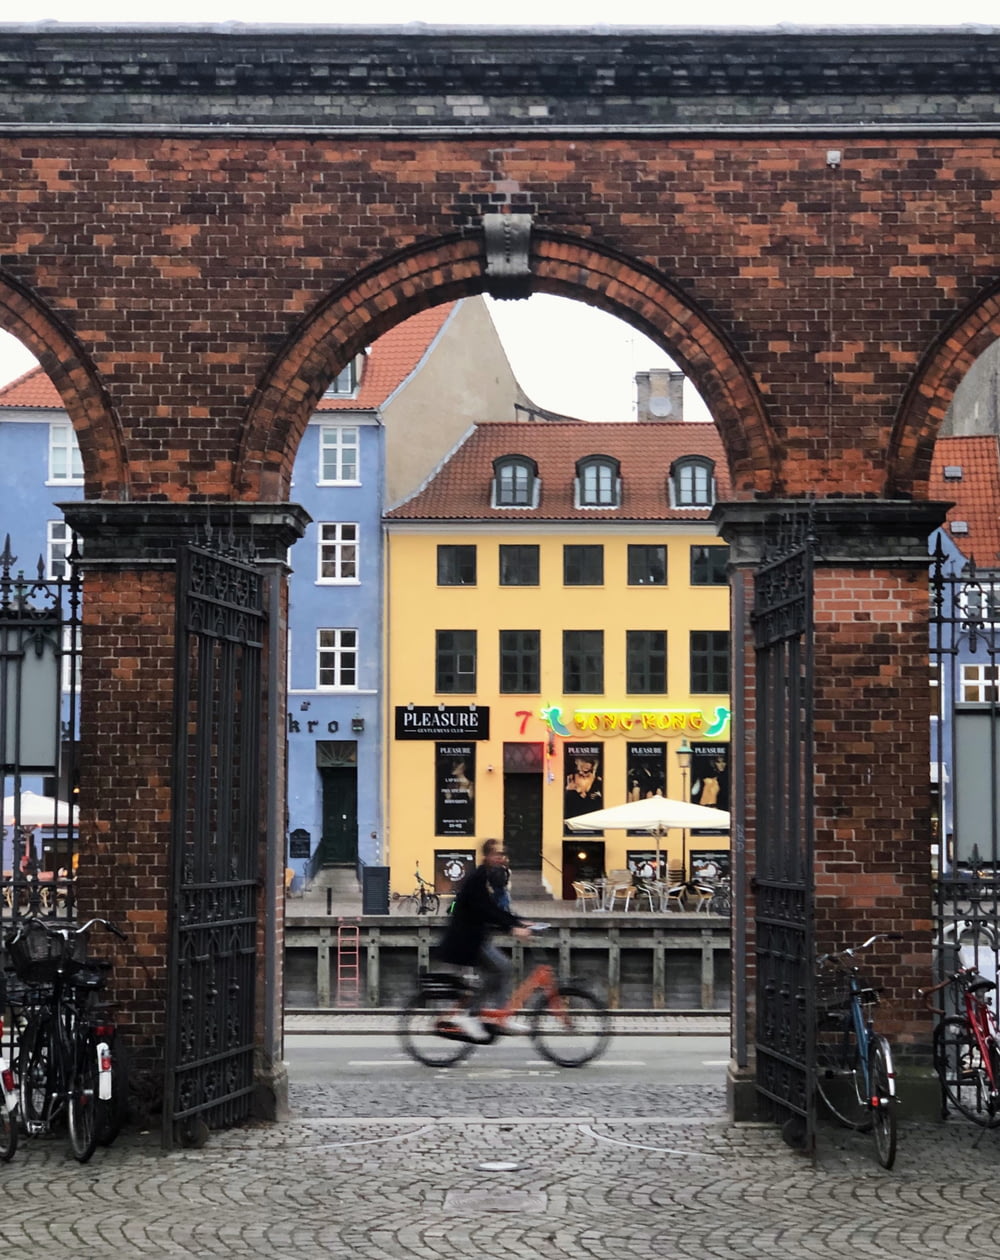 a man riding a bike through a brick archway